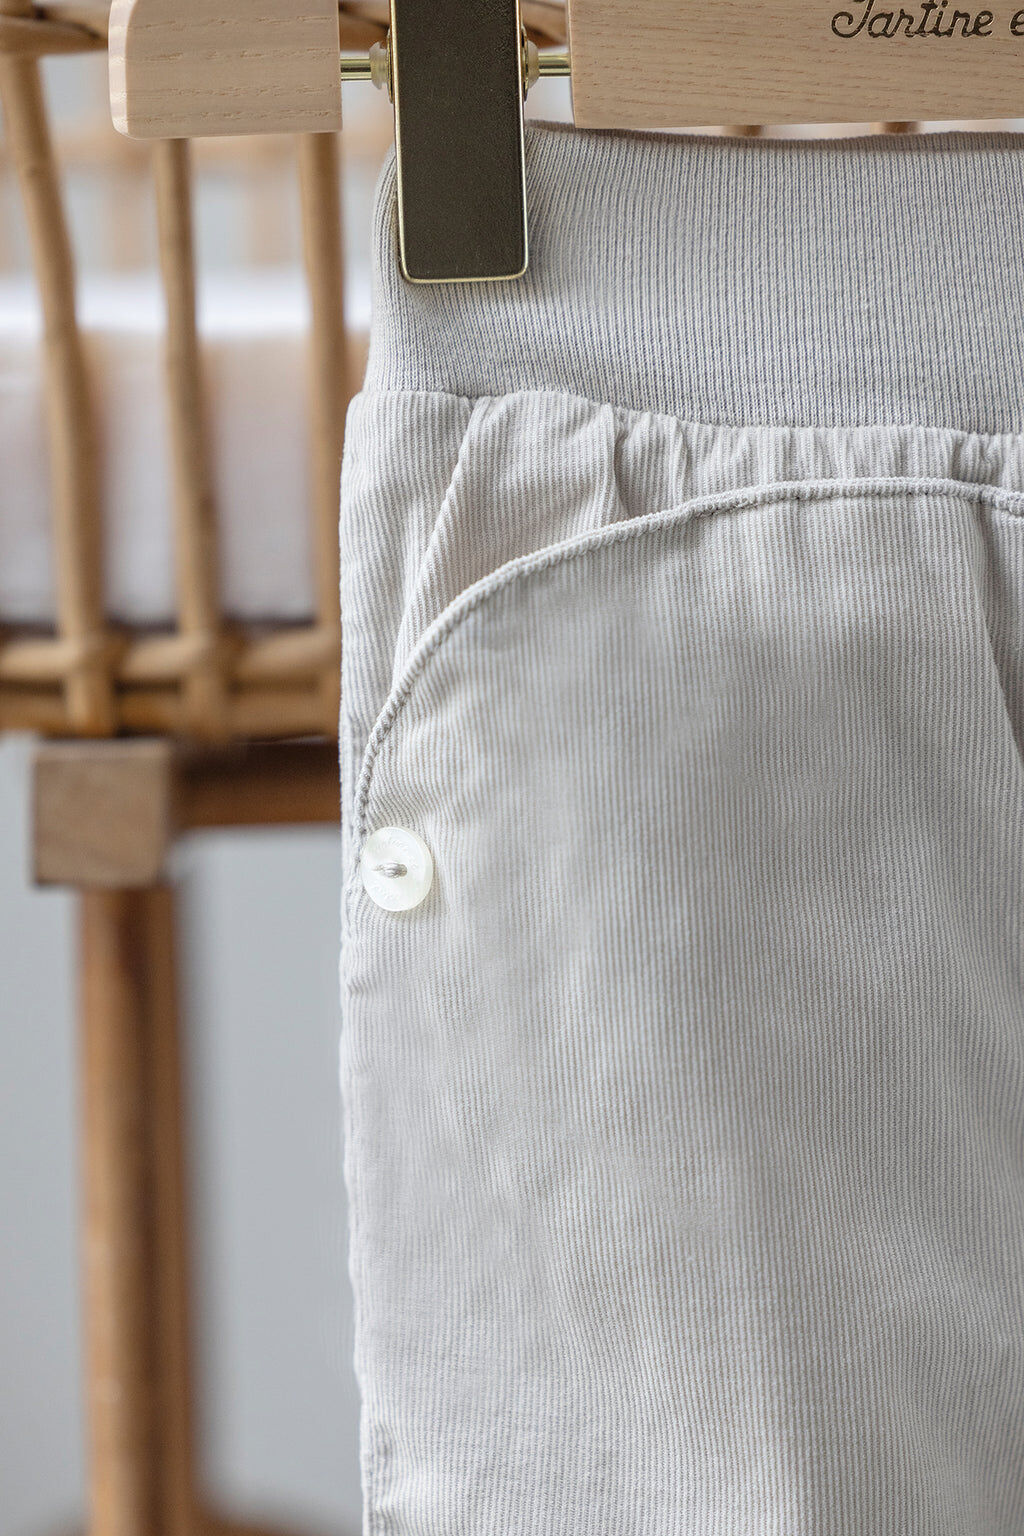 Trousers - Beige cotton